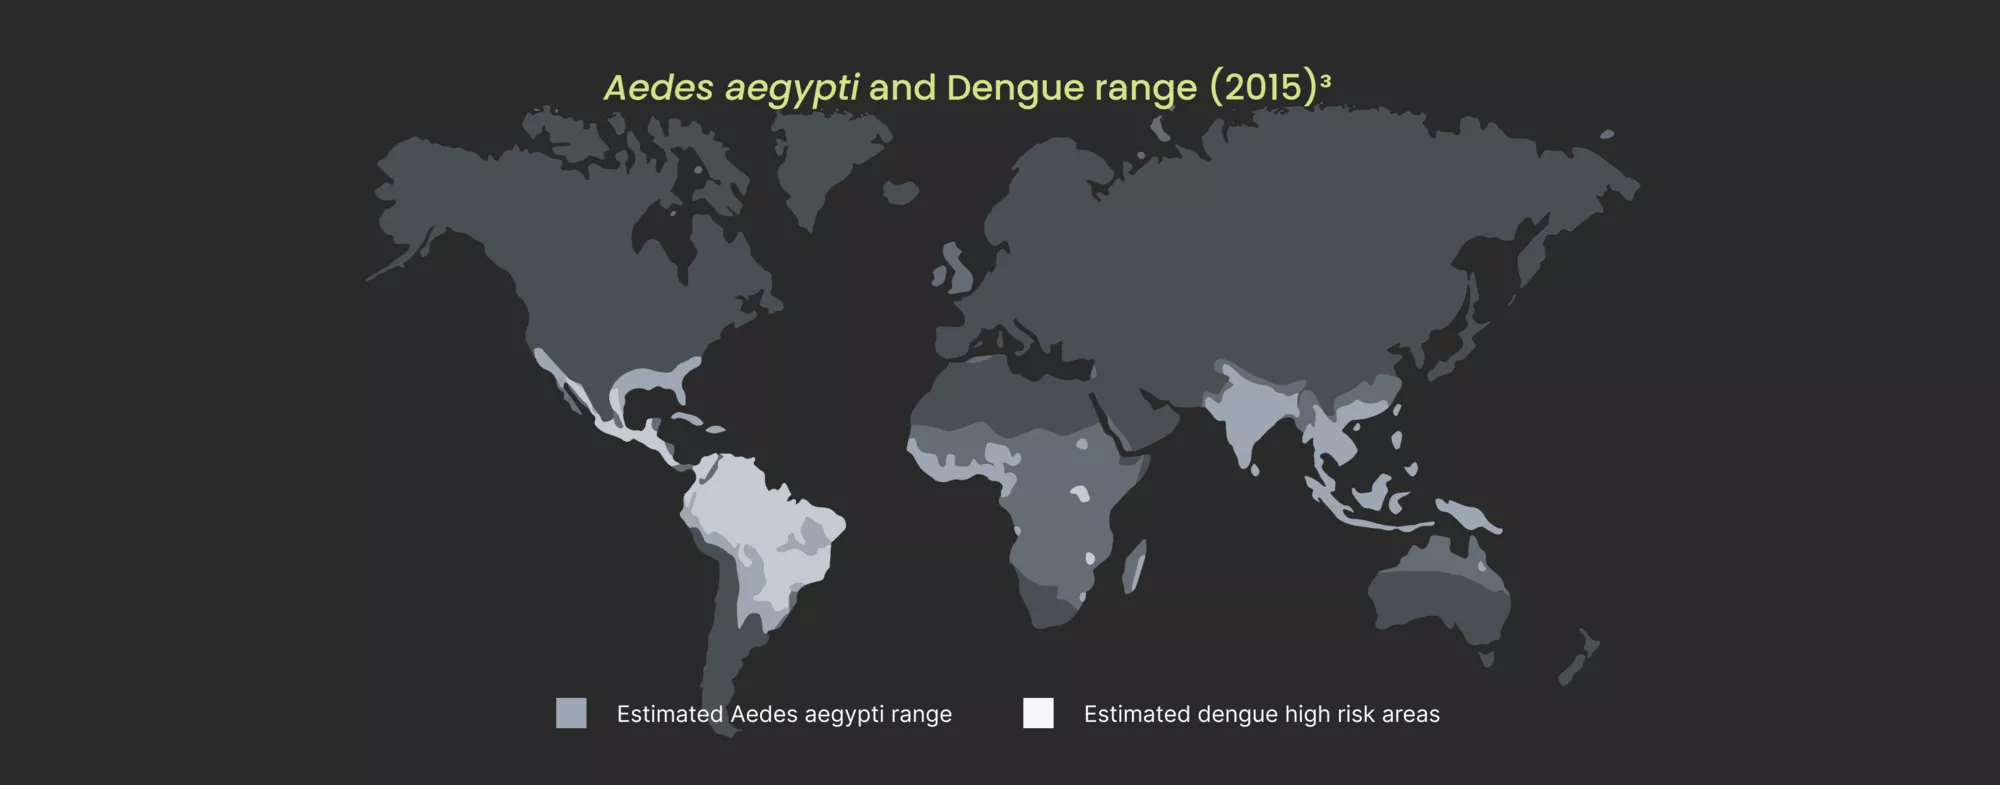 Aedes aegypti and Dengue range (2015), world map